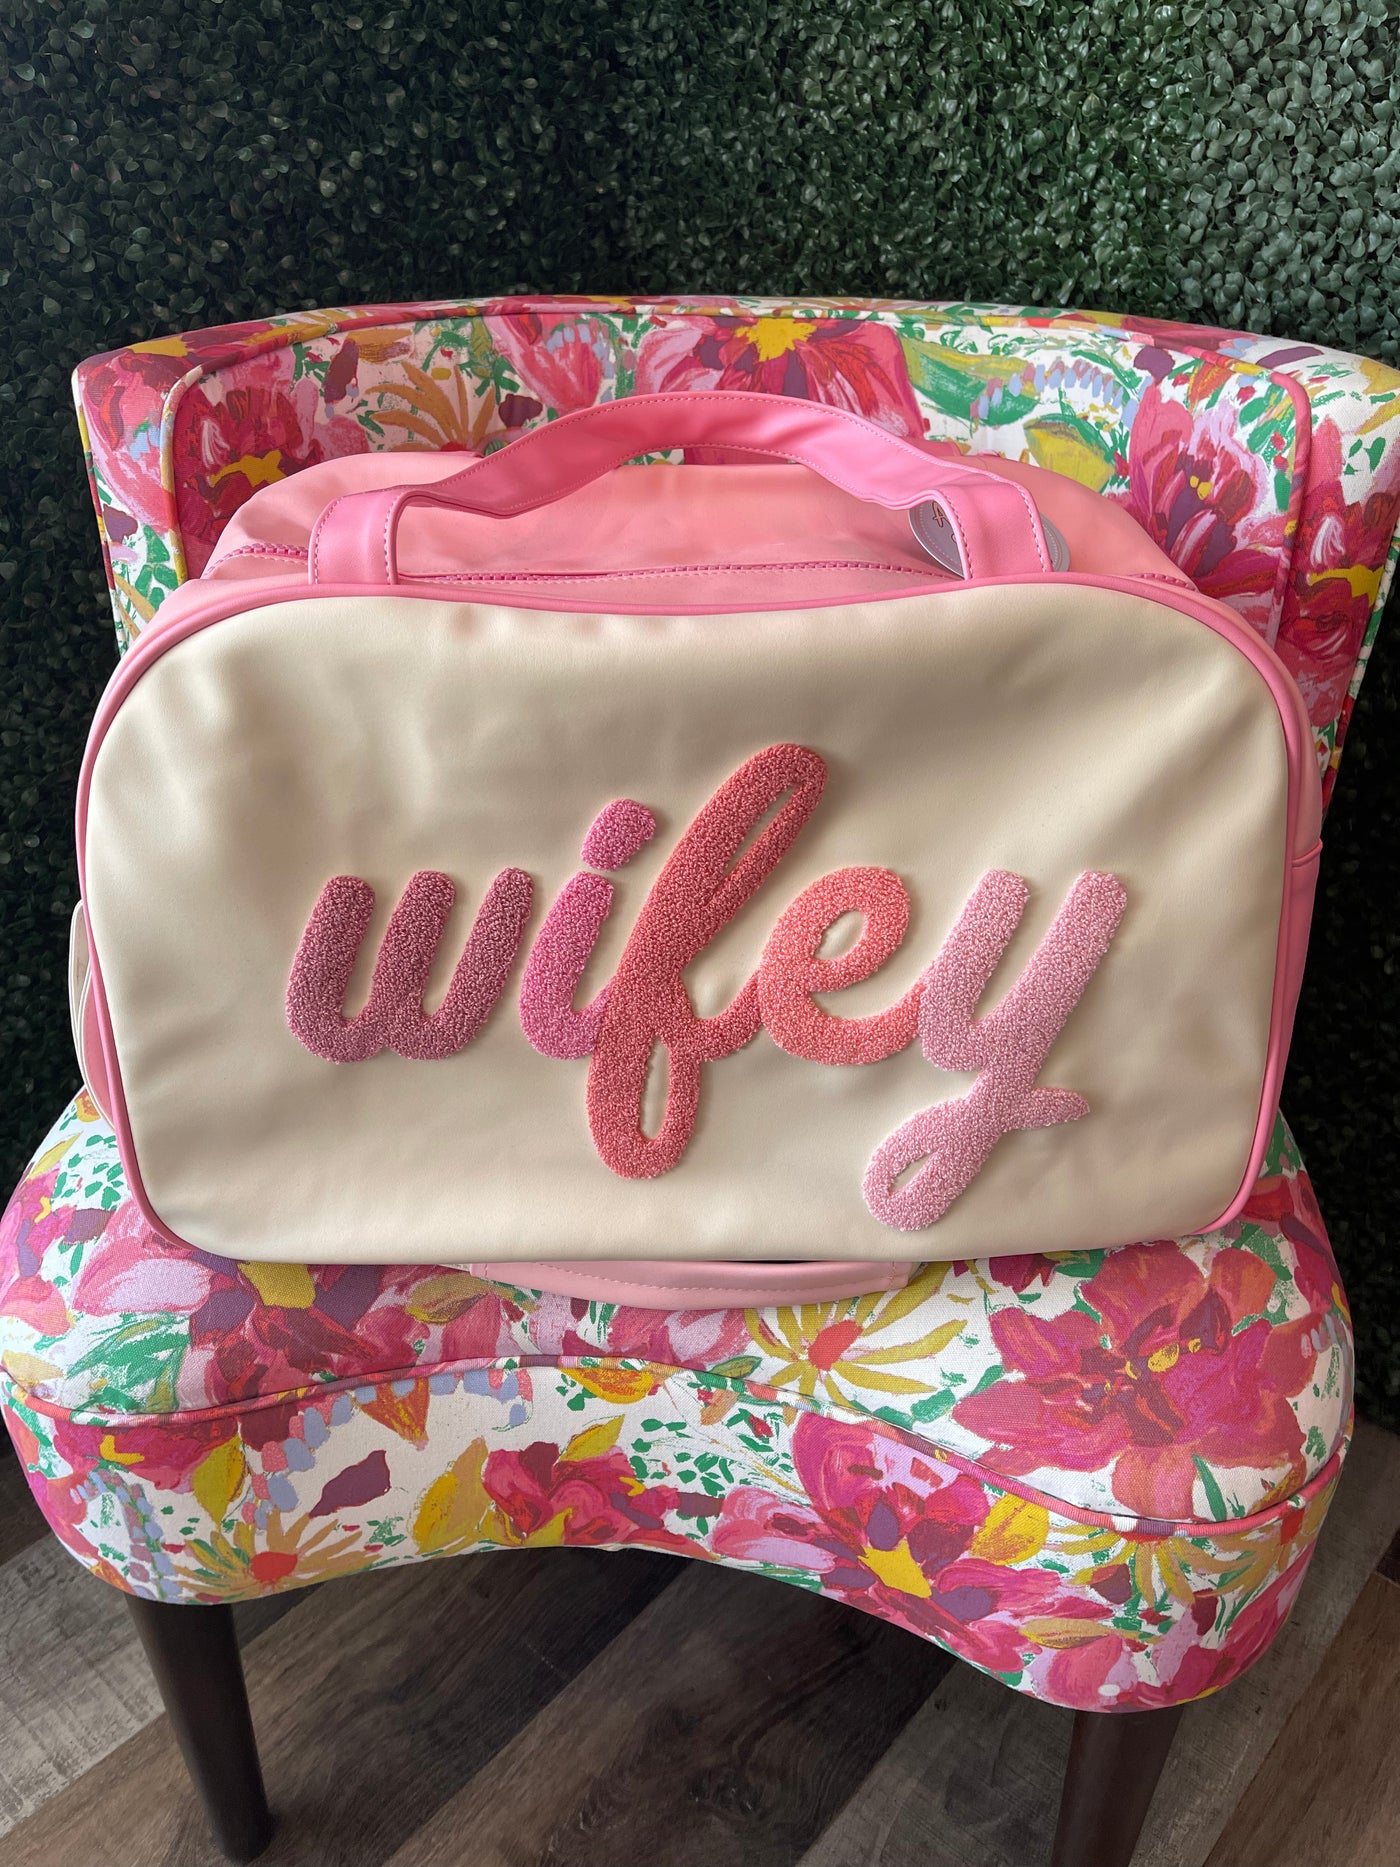 Wifey duffle bag